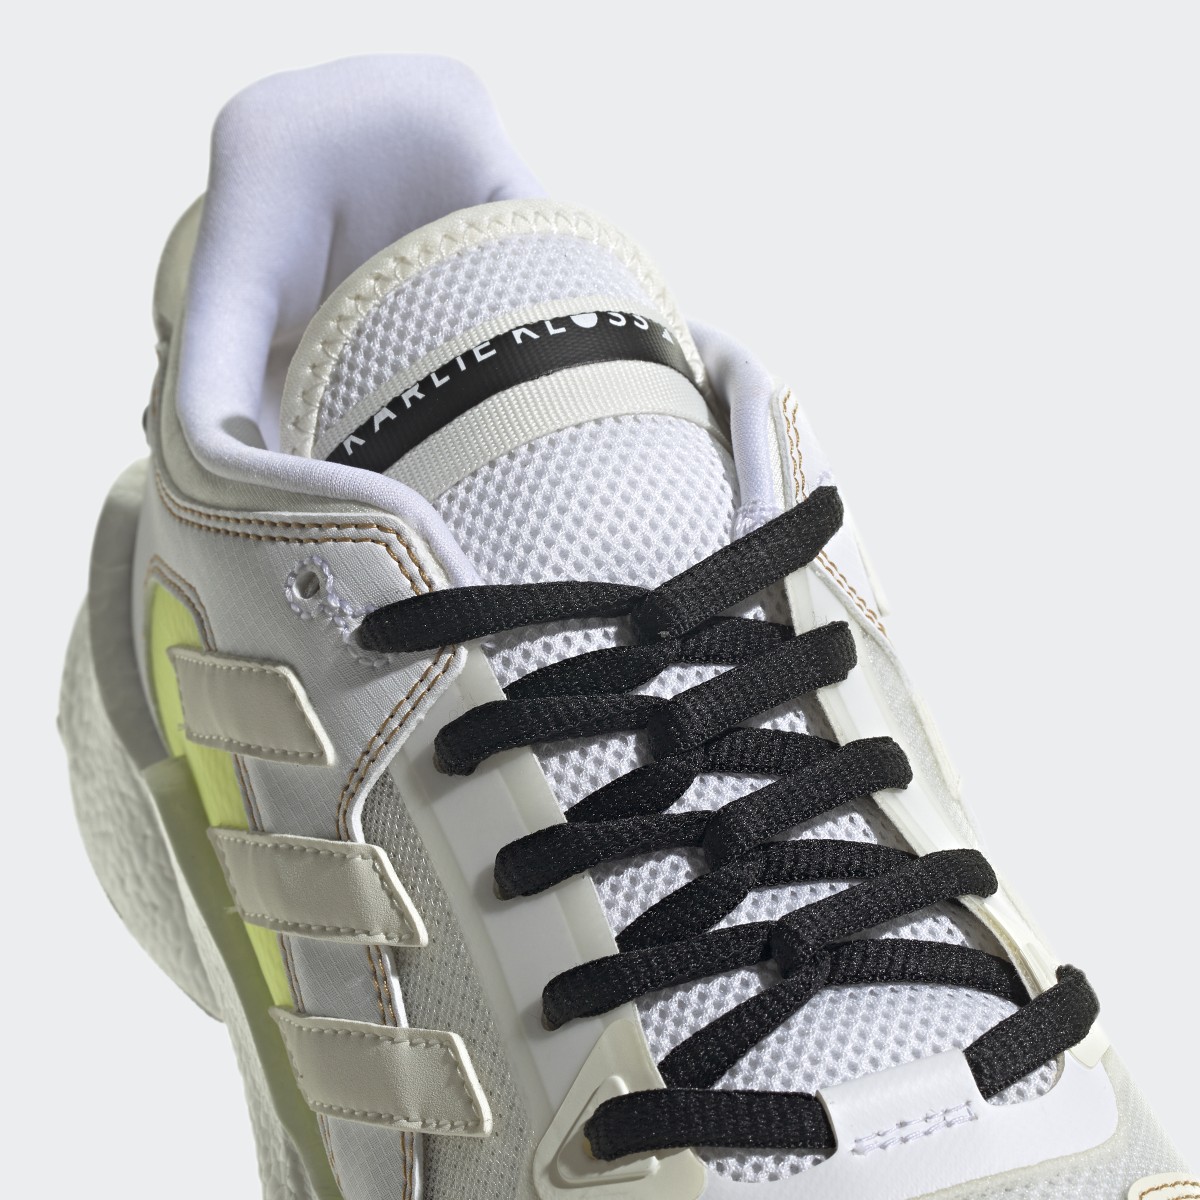 Adidas Zapatilla Karlie Kloss X9000. 9